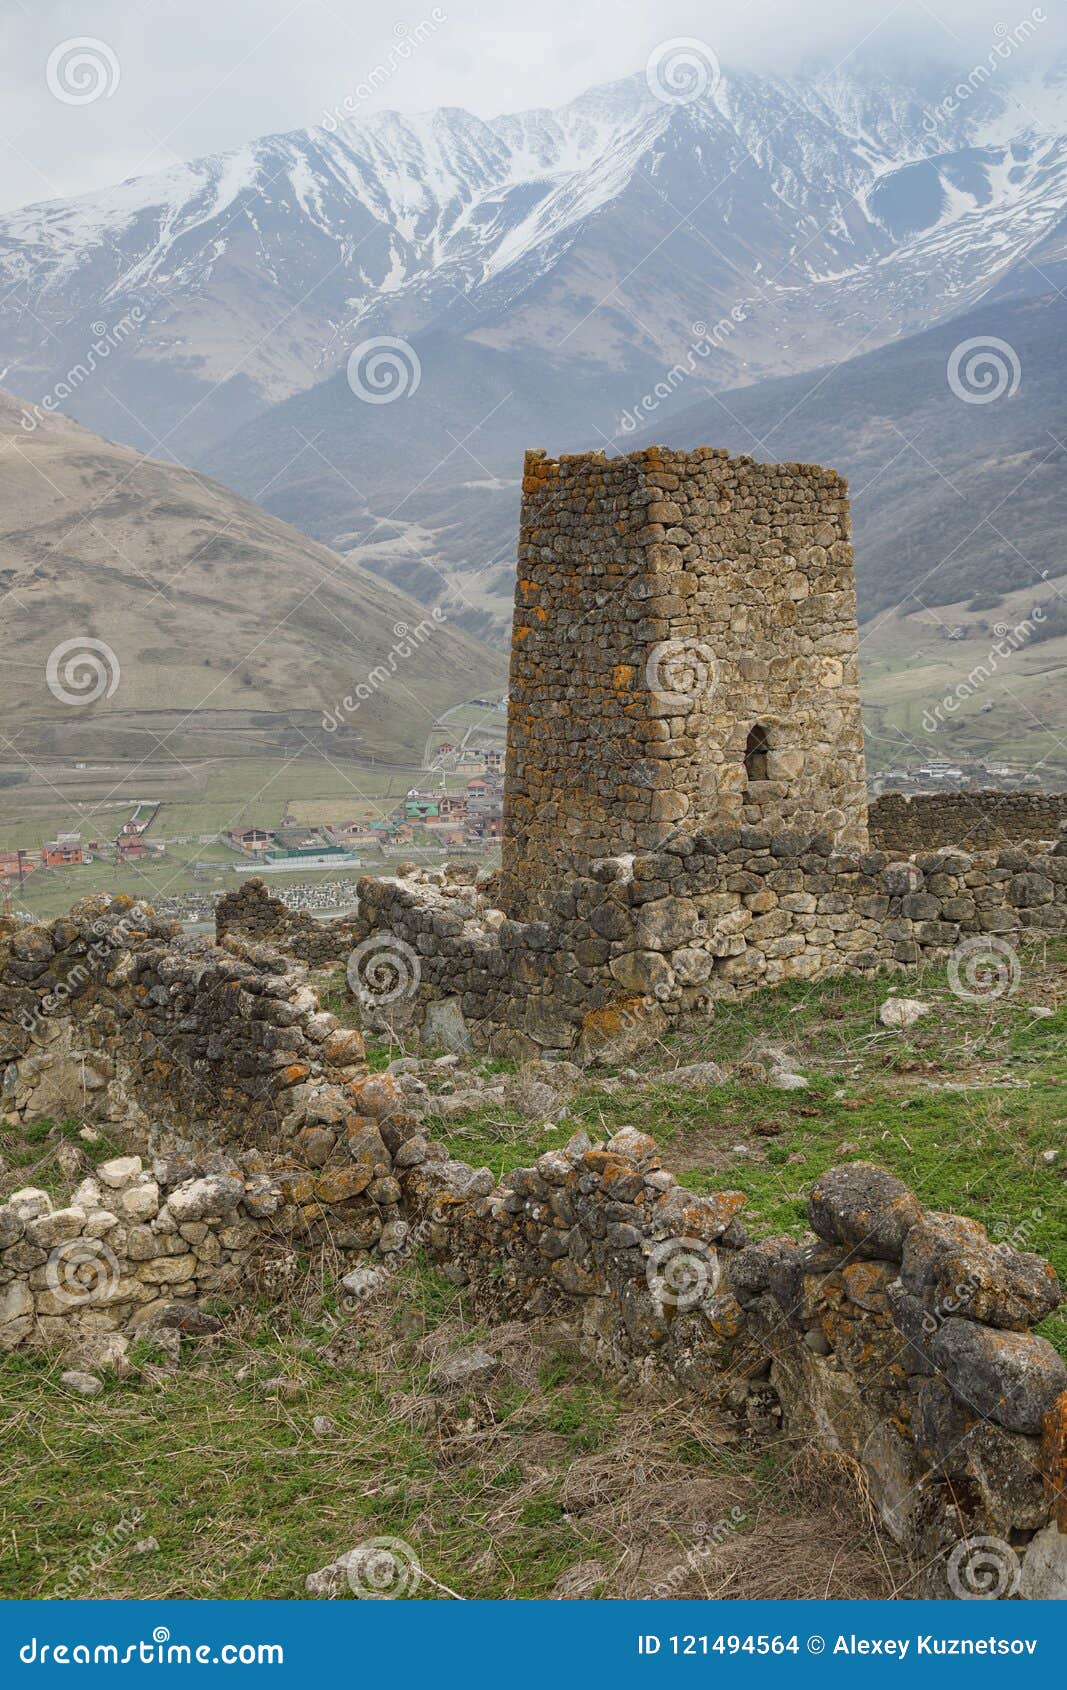 guard tower of abandoned town tsmiti in alania, russia